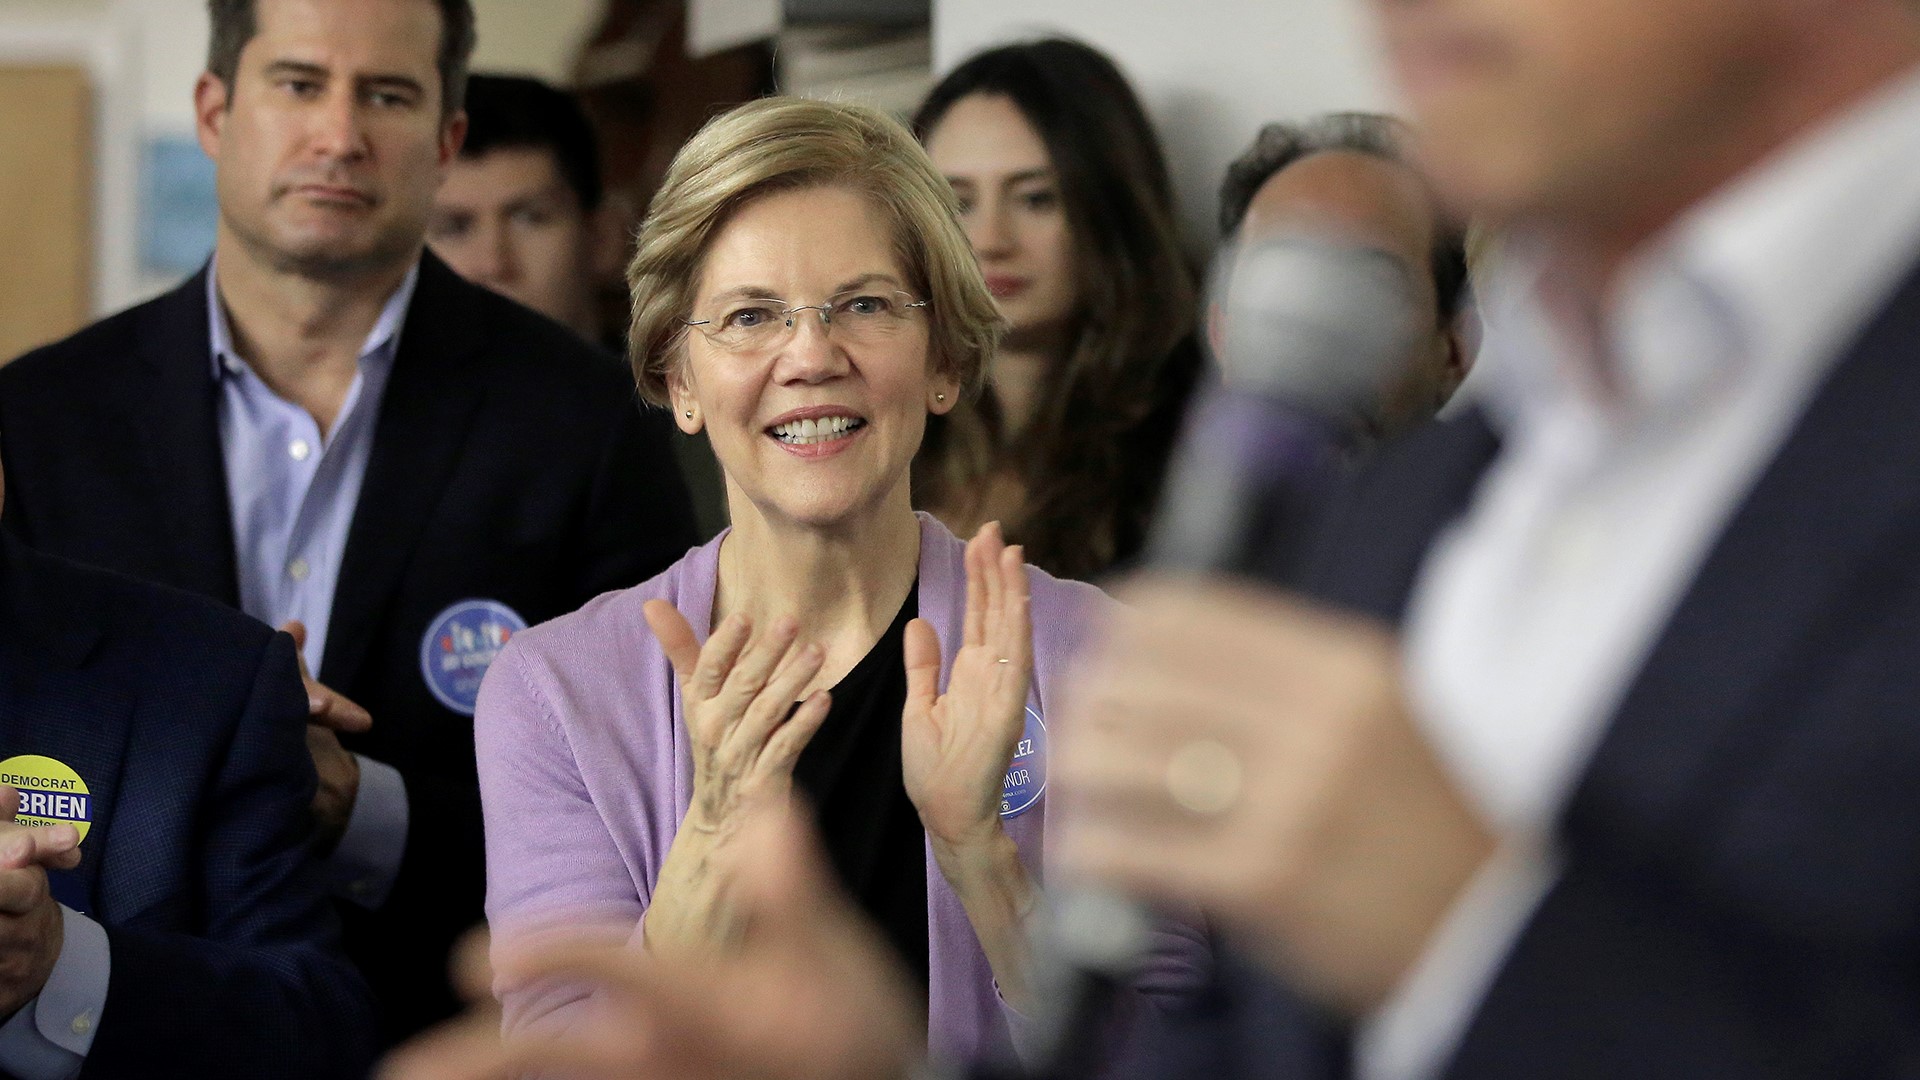 A brief look at 2020 Democratic Presidential Candidate Elizabeth Warren.